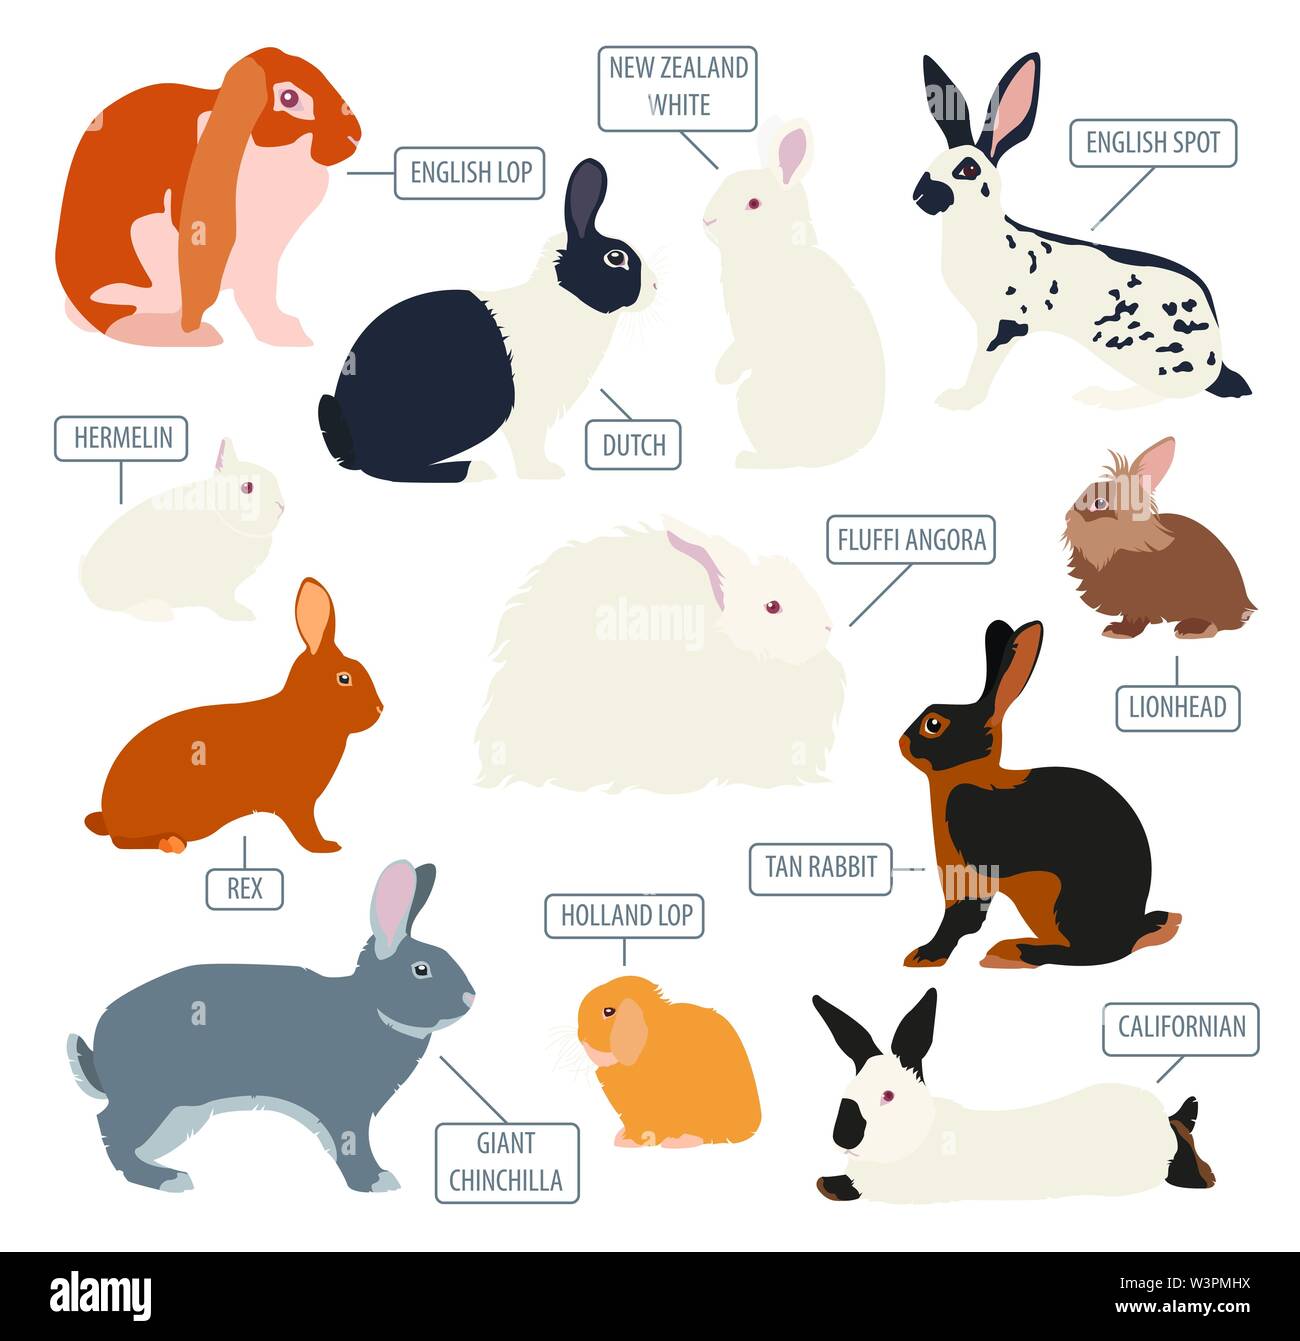 Rabbit, lapin breed icon set. Flat design. Vector illustration Stock Vector